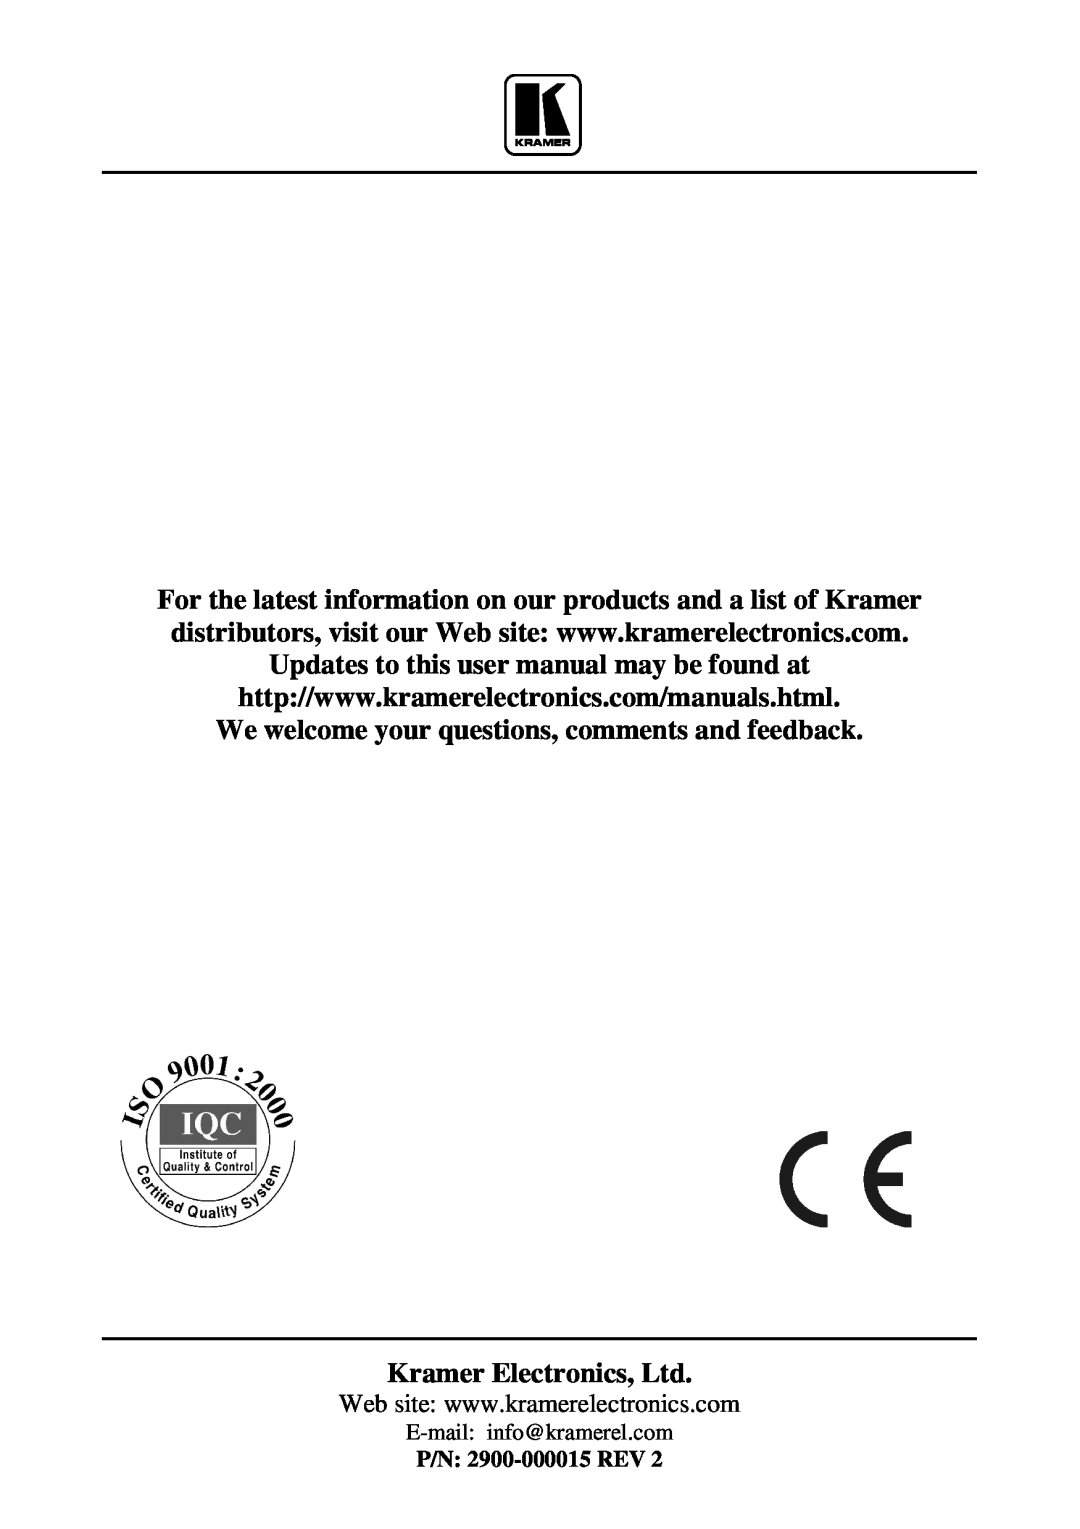 Kramer Electronics FC-15 Updates to this user manual may be found at, P/N 2900-000015 REV 